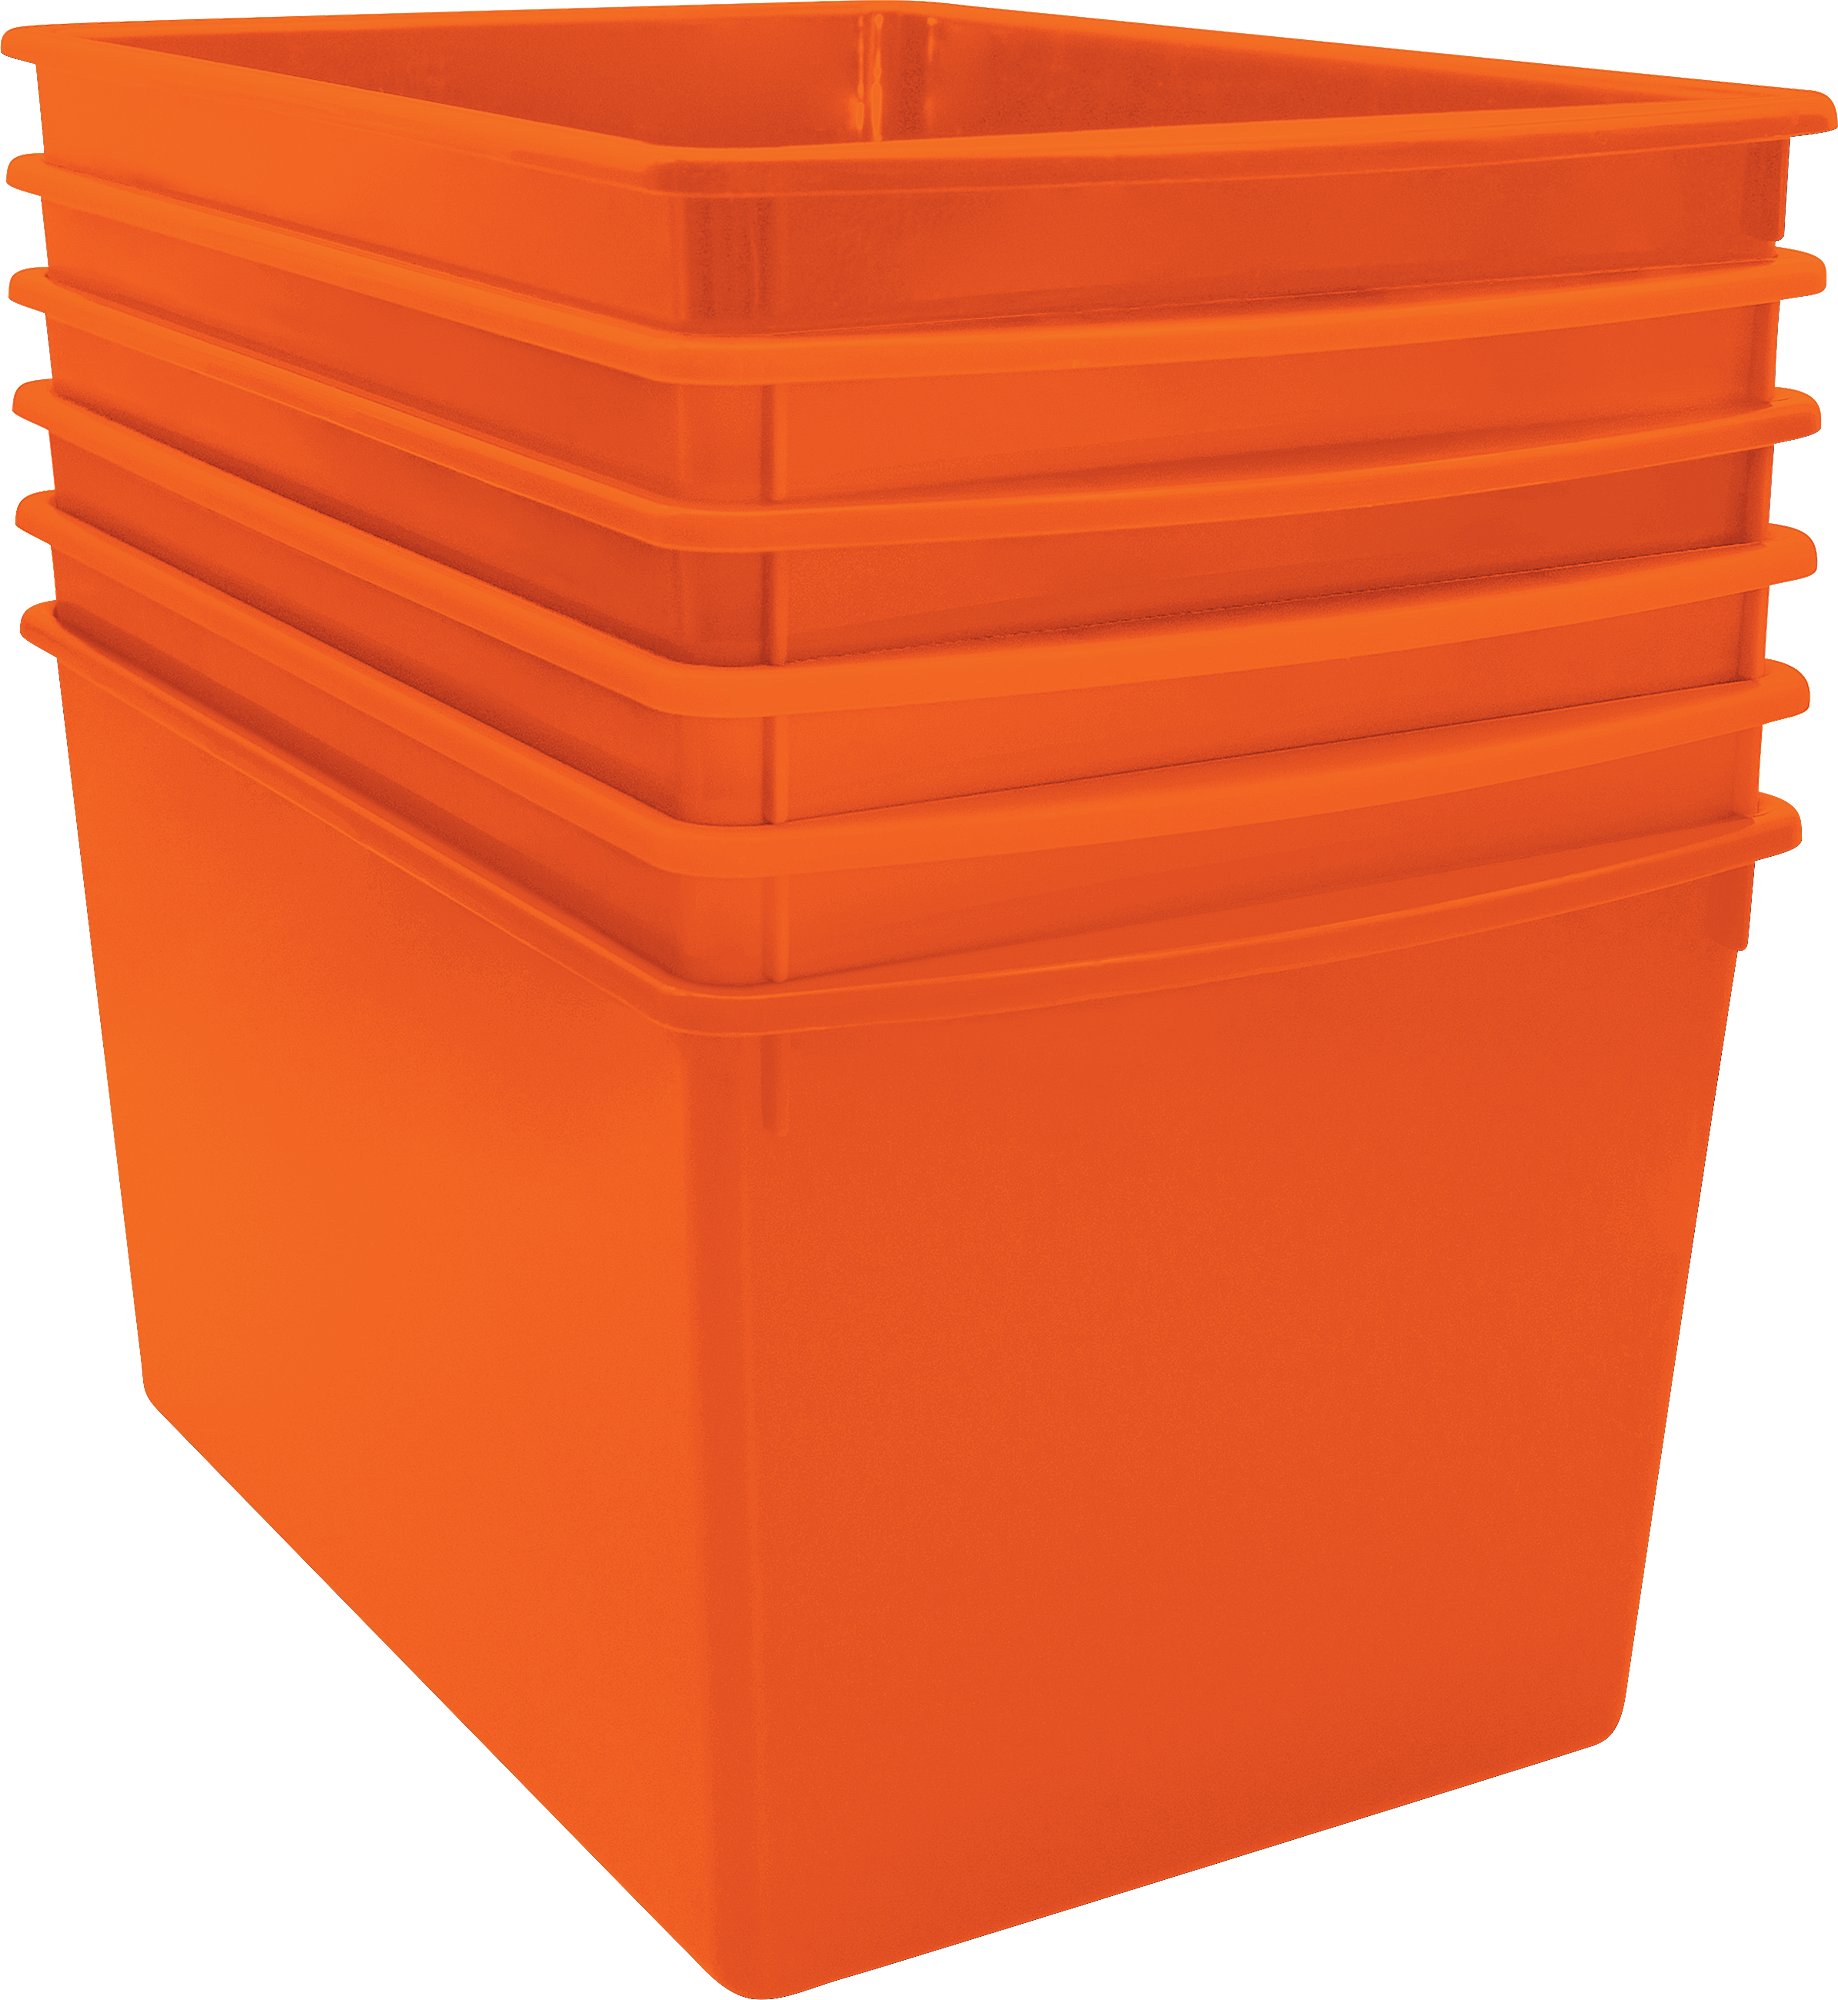 Teacher Created Resources TCR20394 Plastic Storage Bin Orange - Small